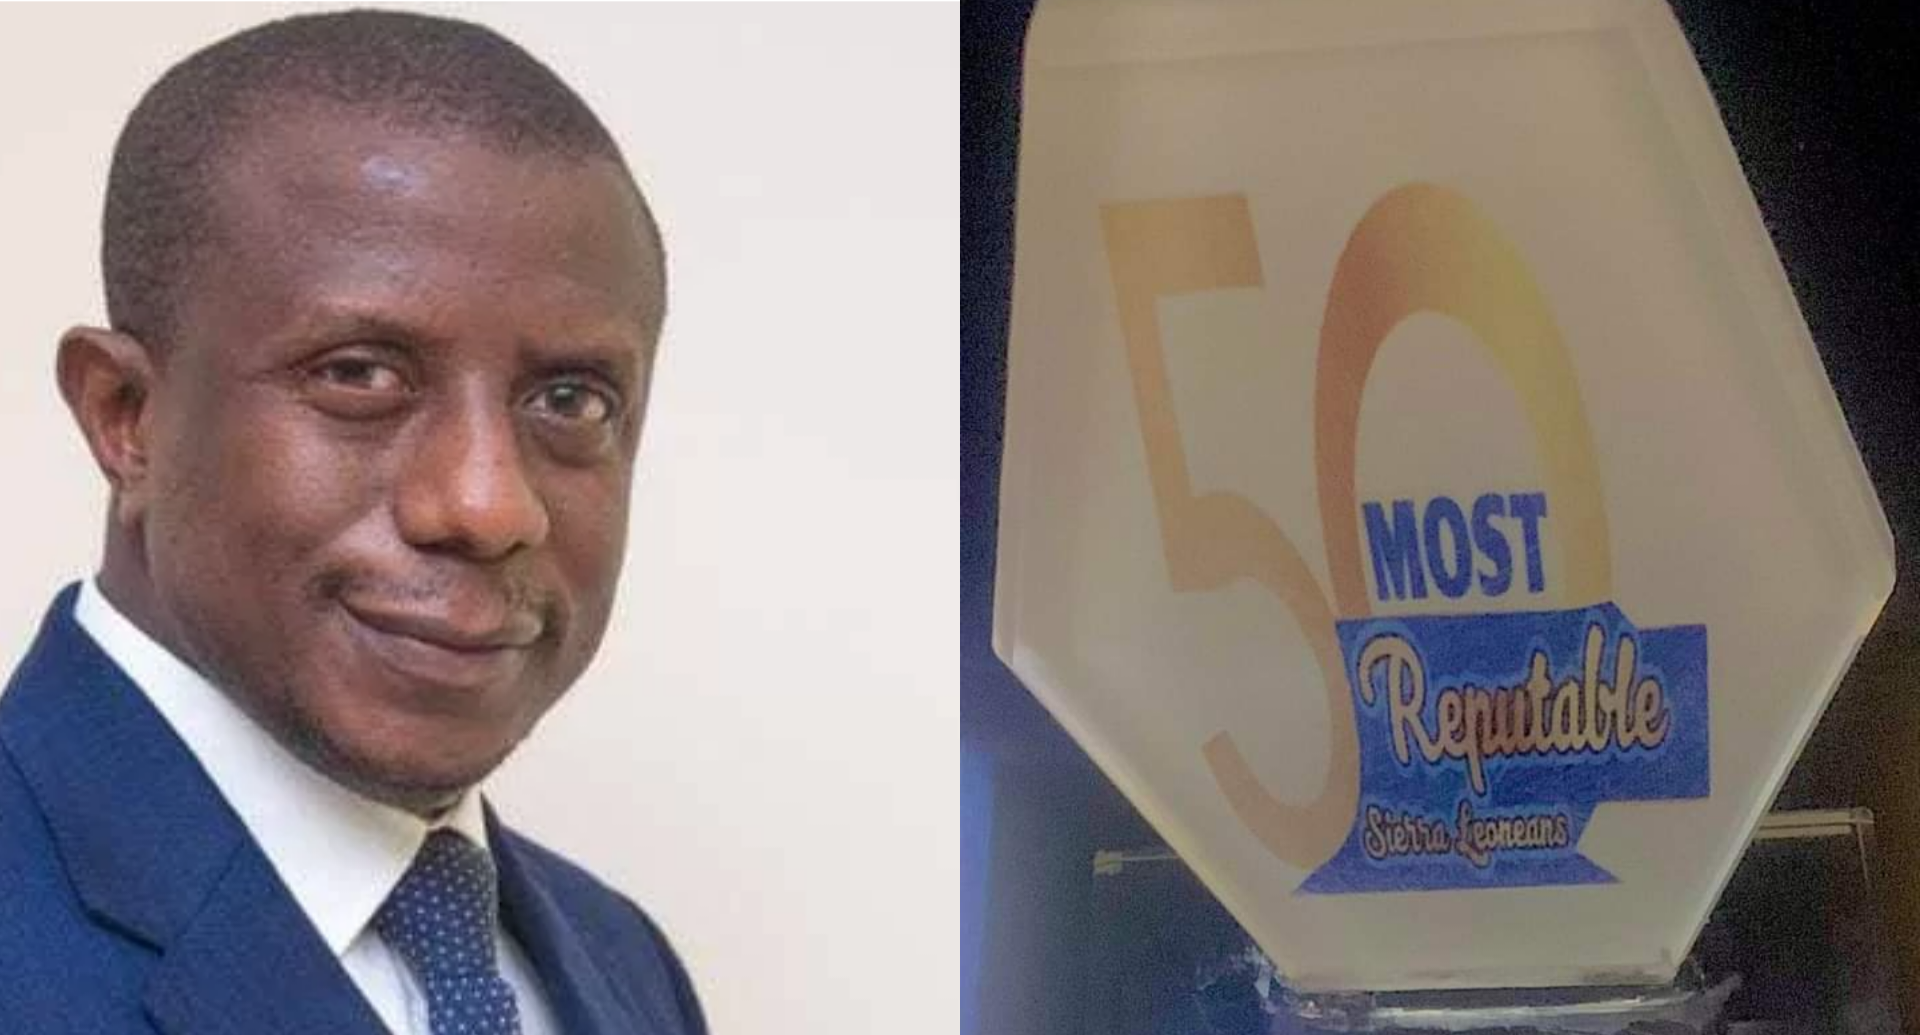 Deputy Minister of Justice, Esq Umaru Napoleon Koroma Bags 50 Most Reputable Sierra Leonean Award